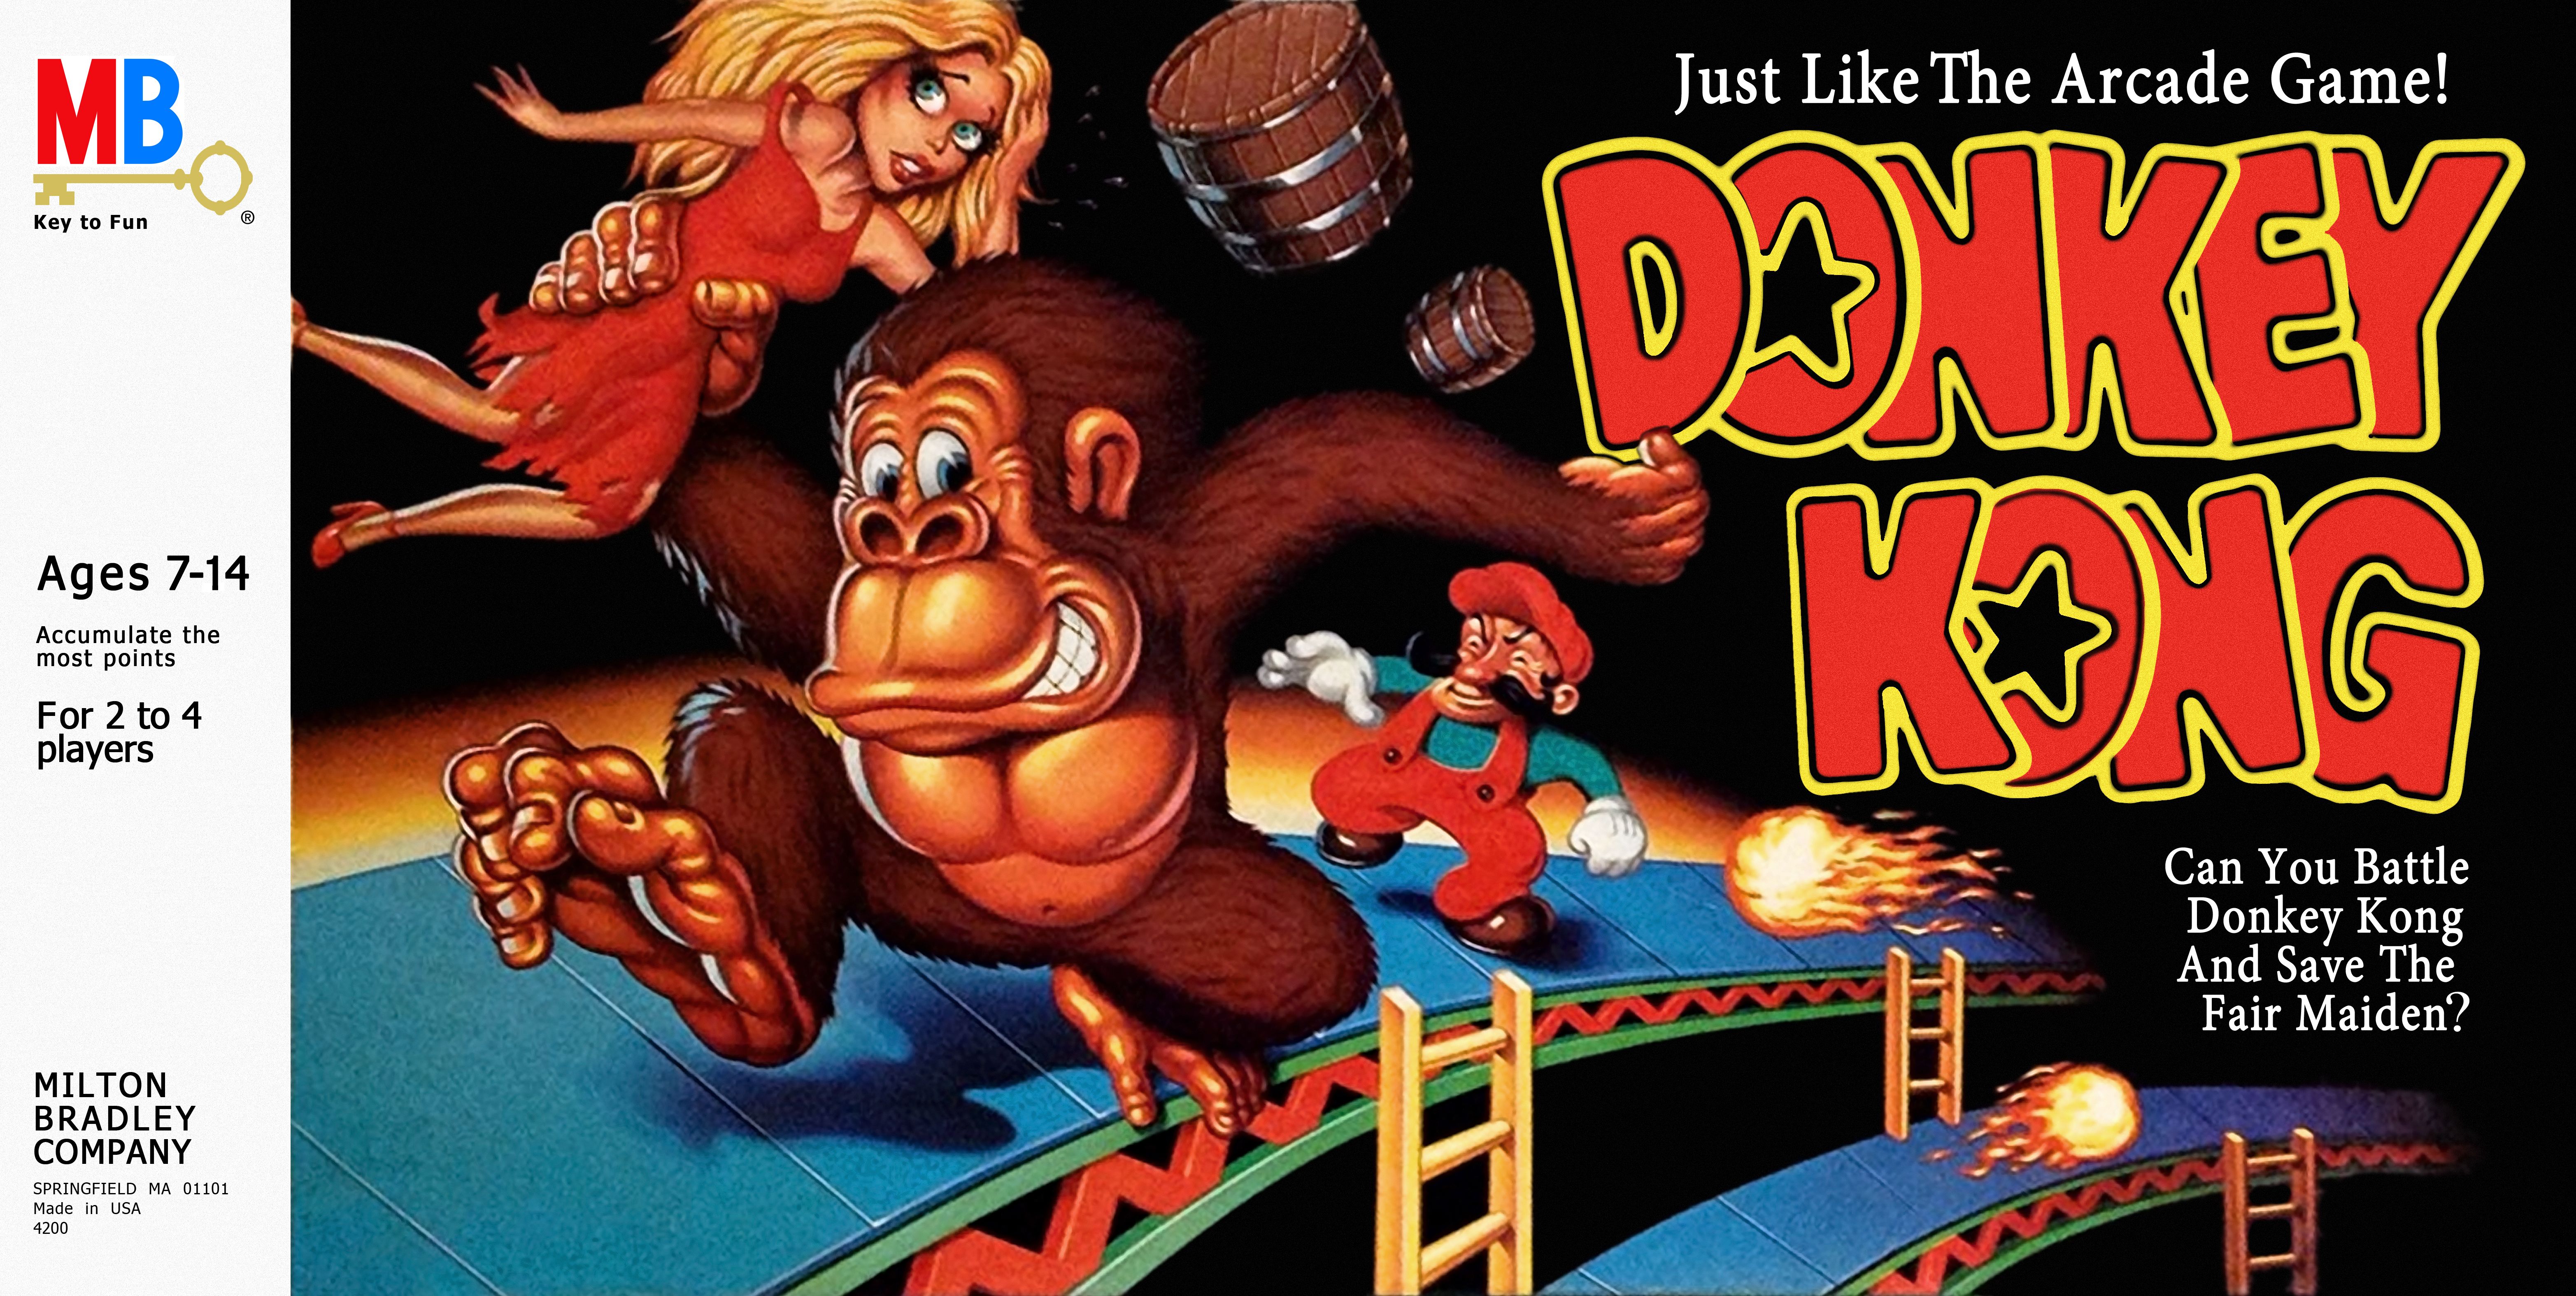 Donkey Kong (arcade game) - Wikipedia